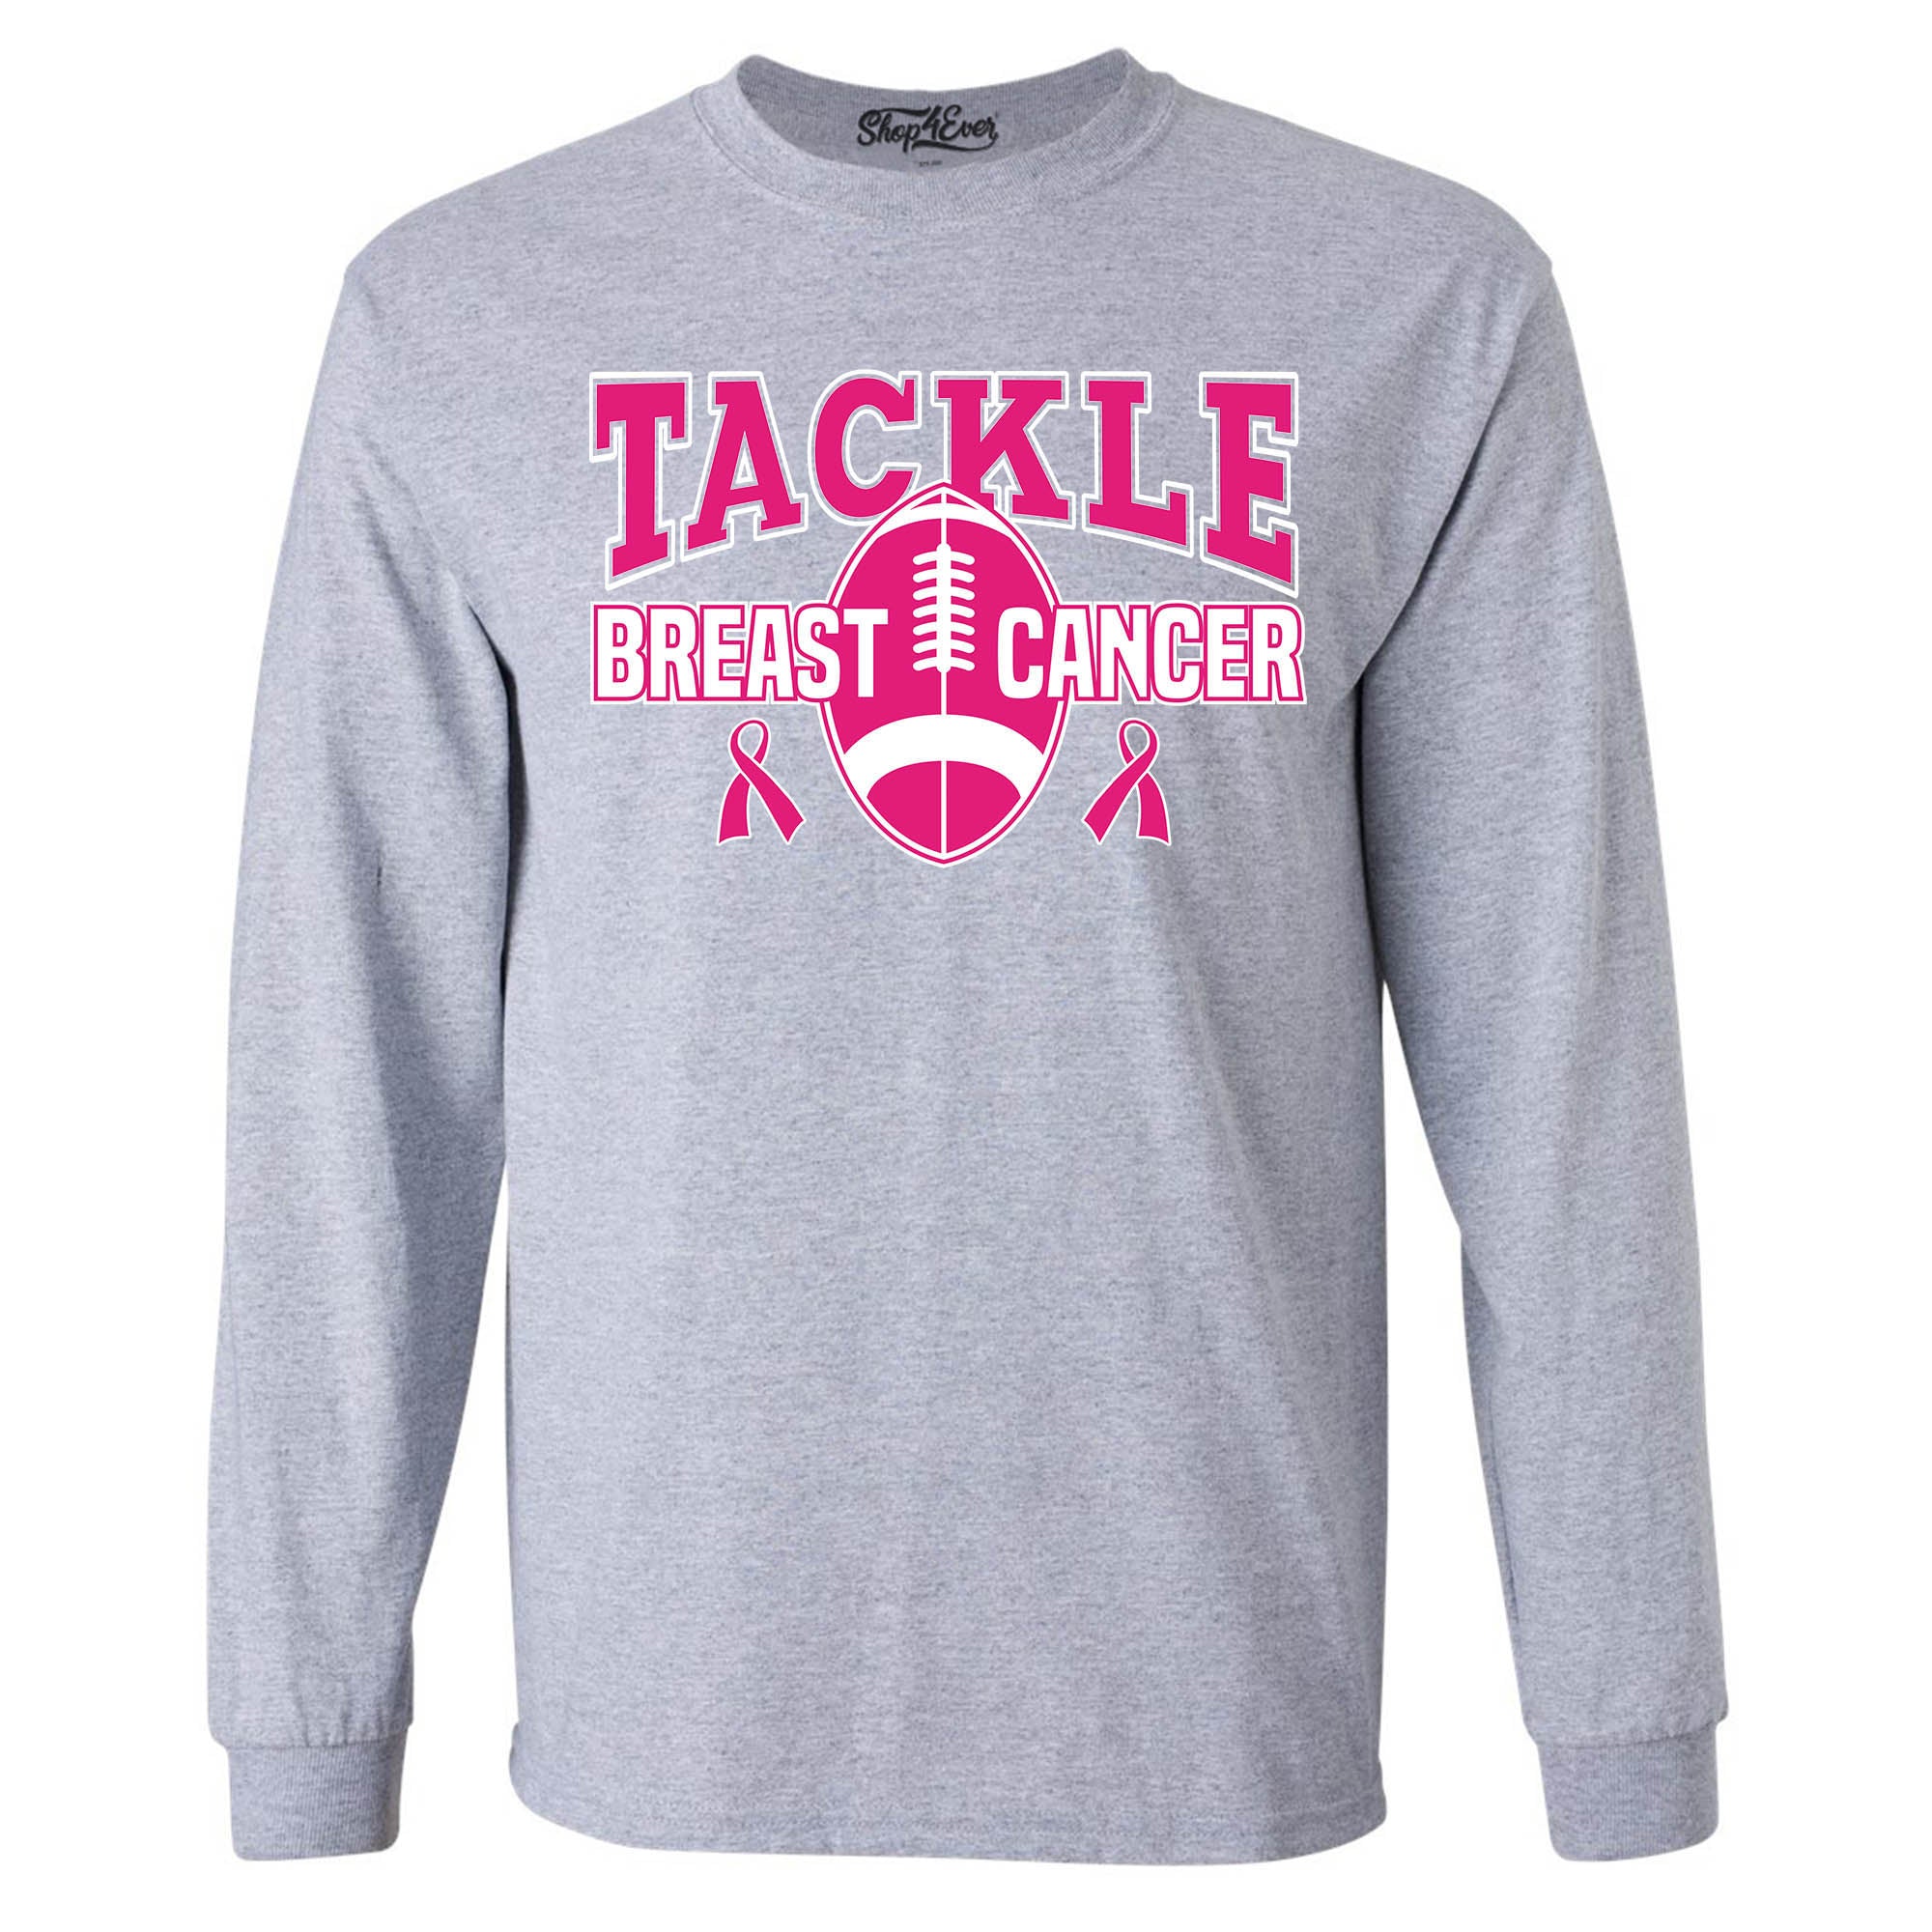 Tackle Breast Cancer Awareness Long Sleeve Shirt